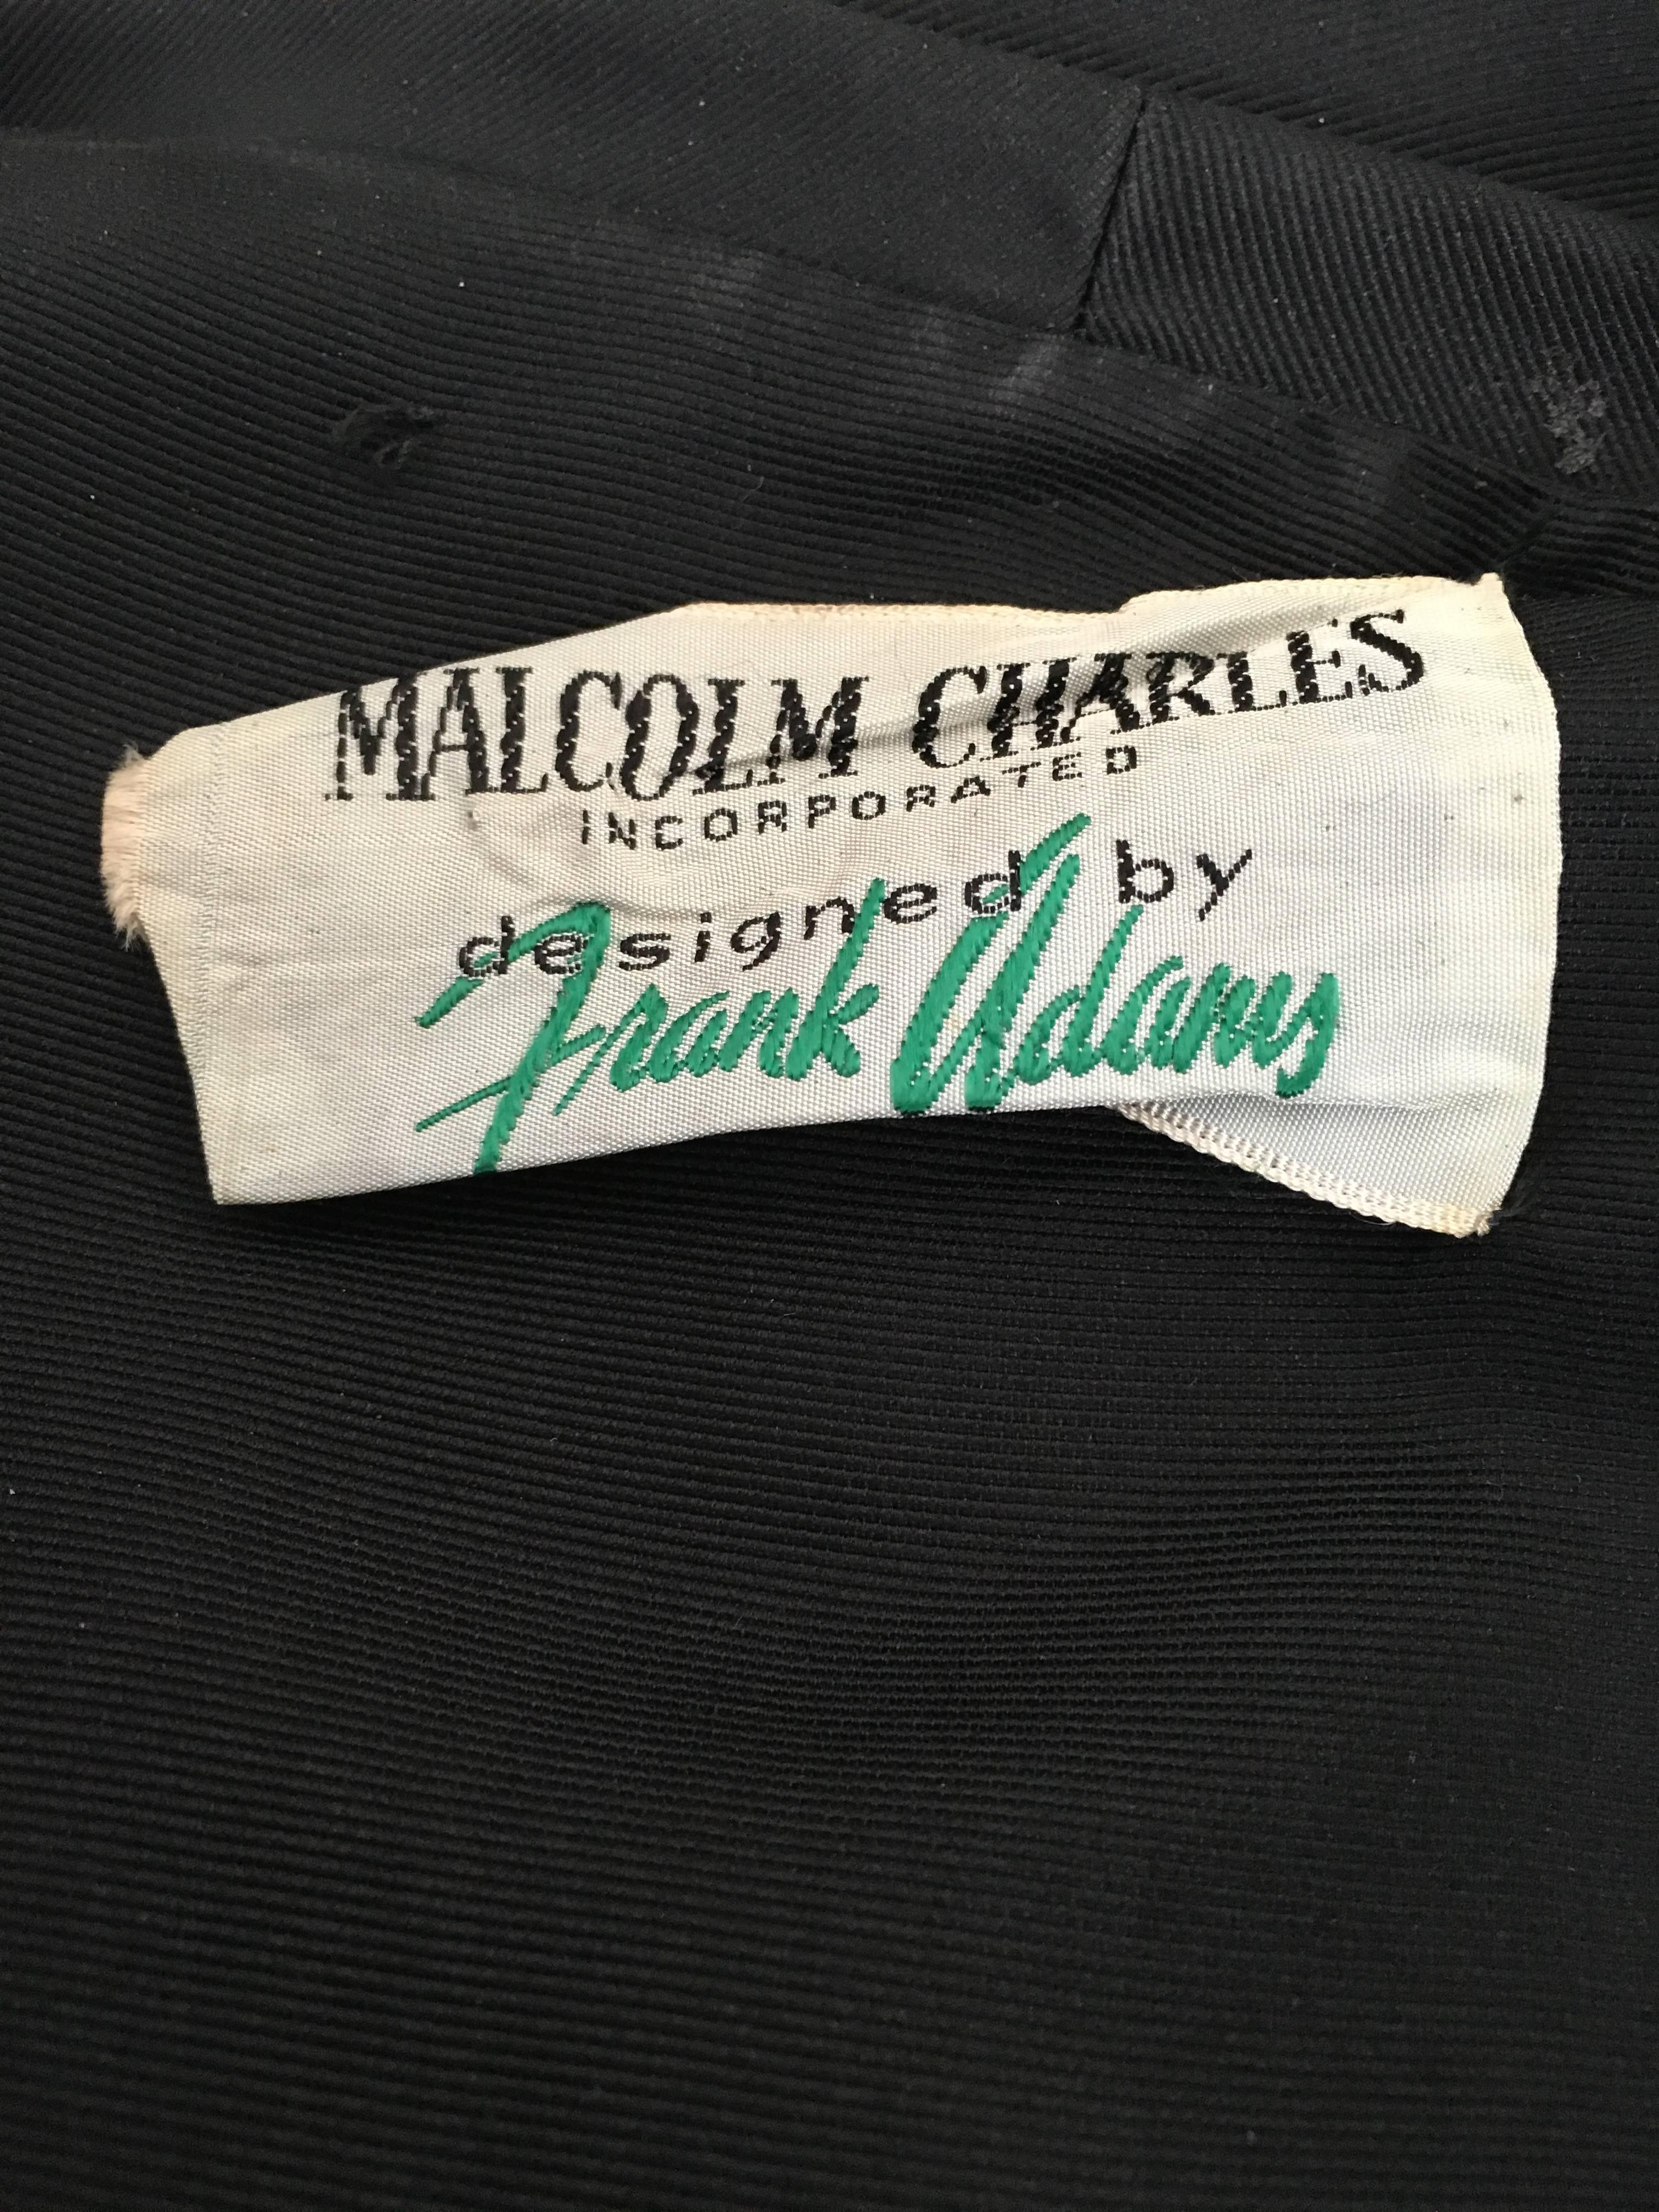 Malcolm Charles Black Silk Taffeta Dress Size 6. For Sale 3